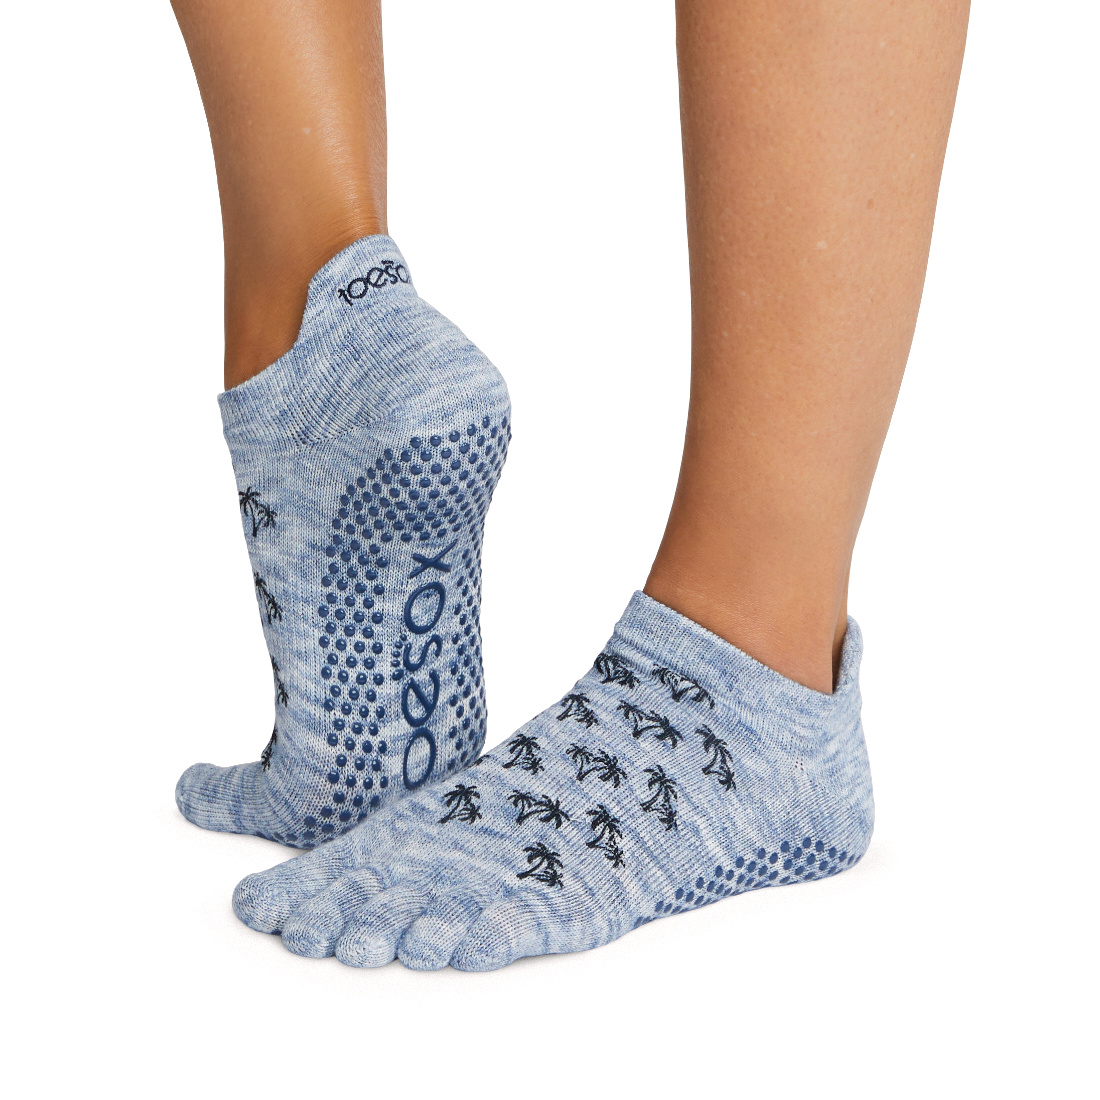 Half Toe Elle in Nostalgic Grip Socks - ToeSox - Mad-HQ